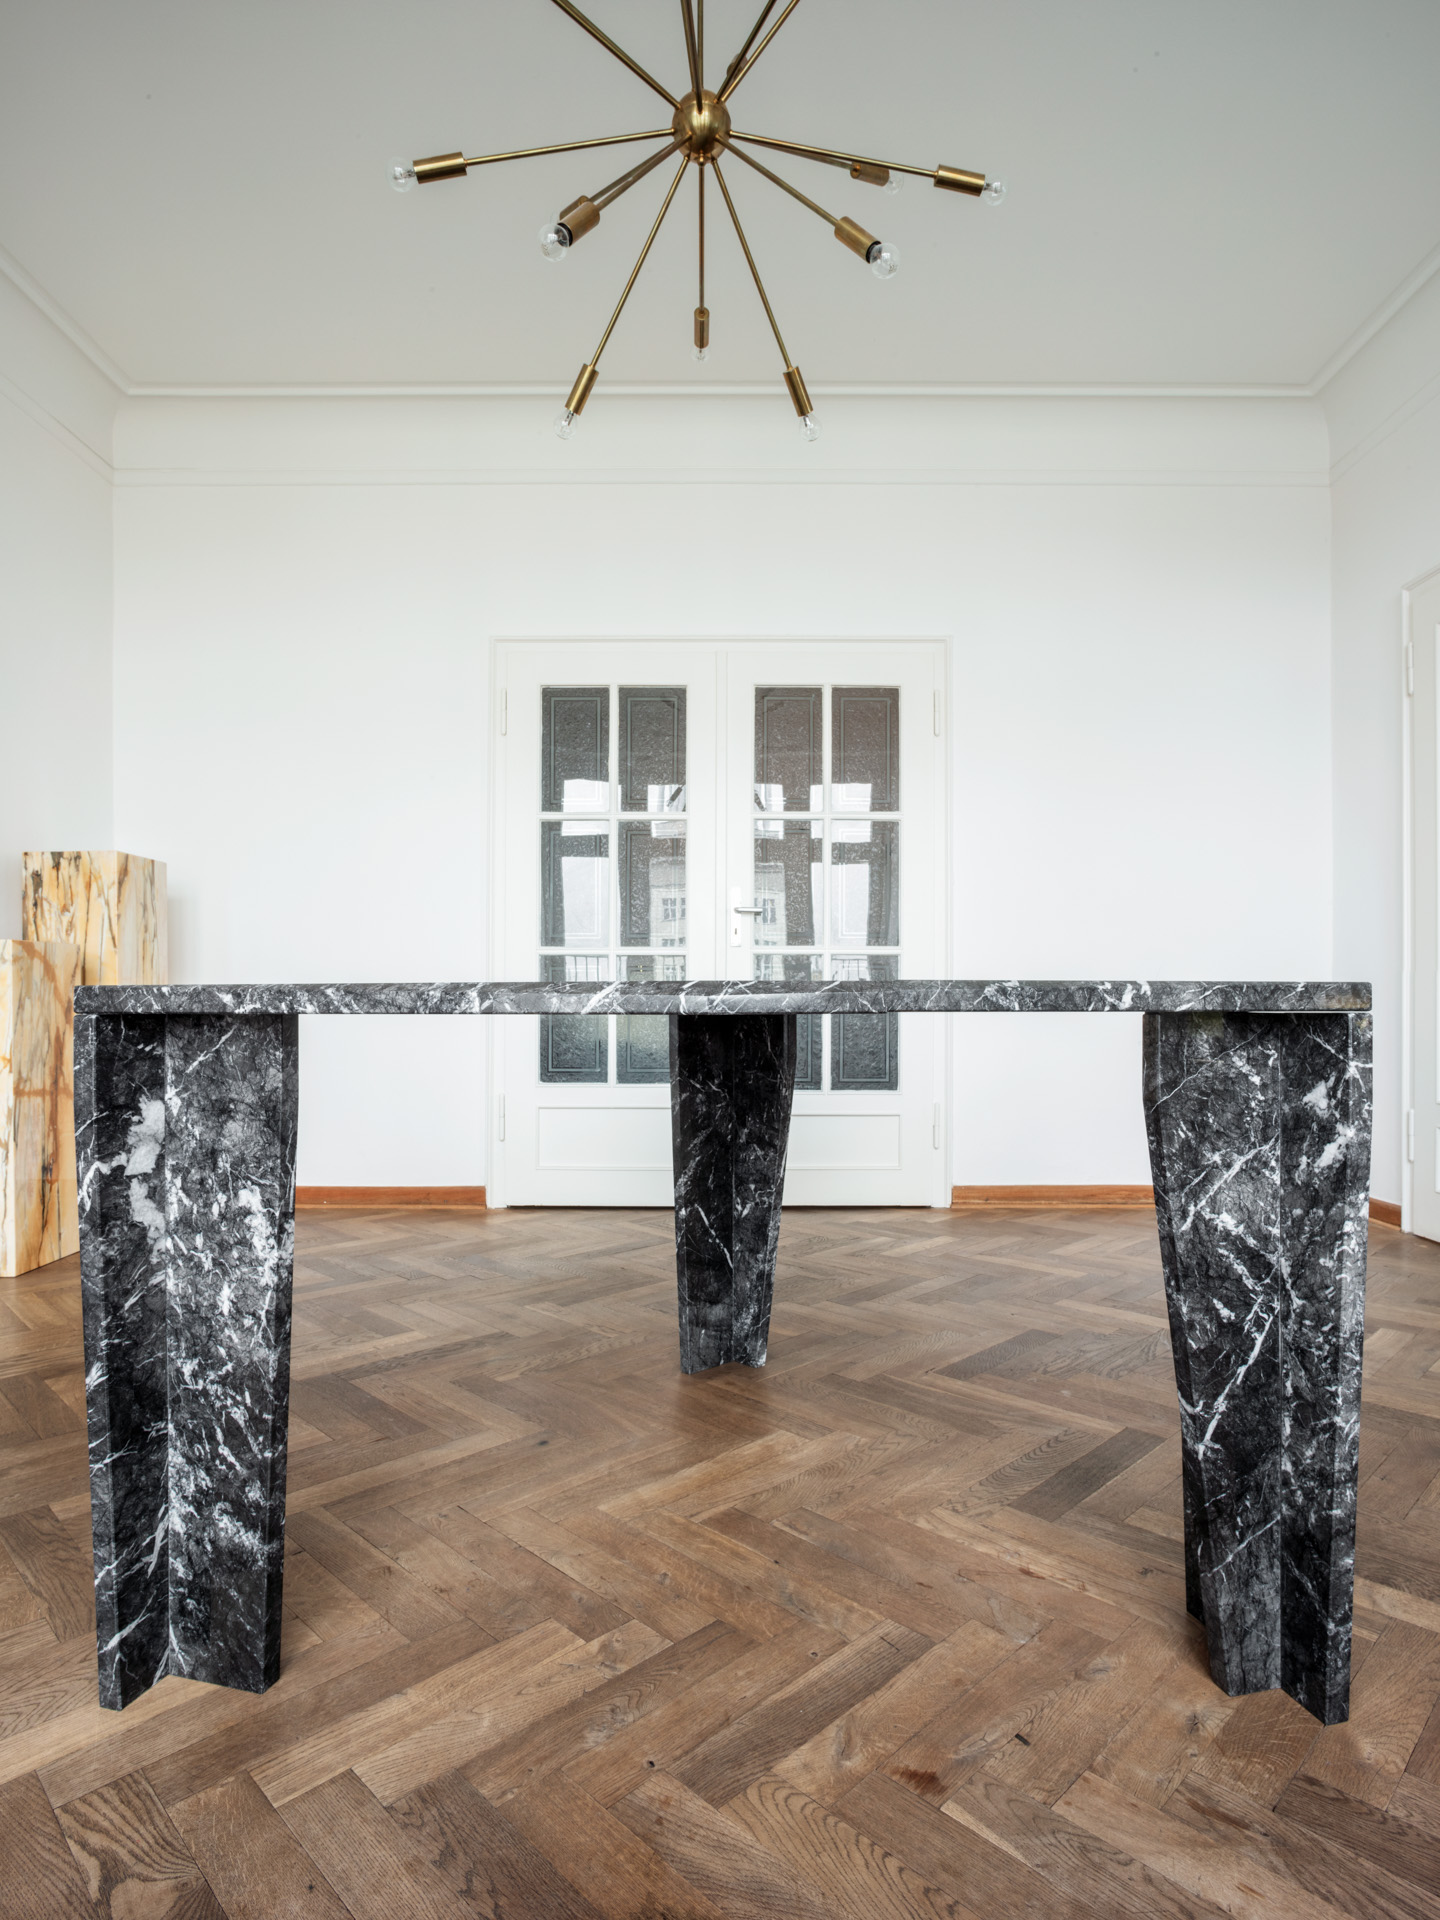 Z6 Marble Table ©Fourrichon Architecture